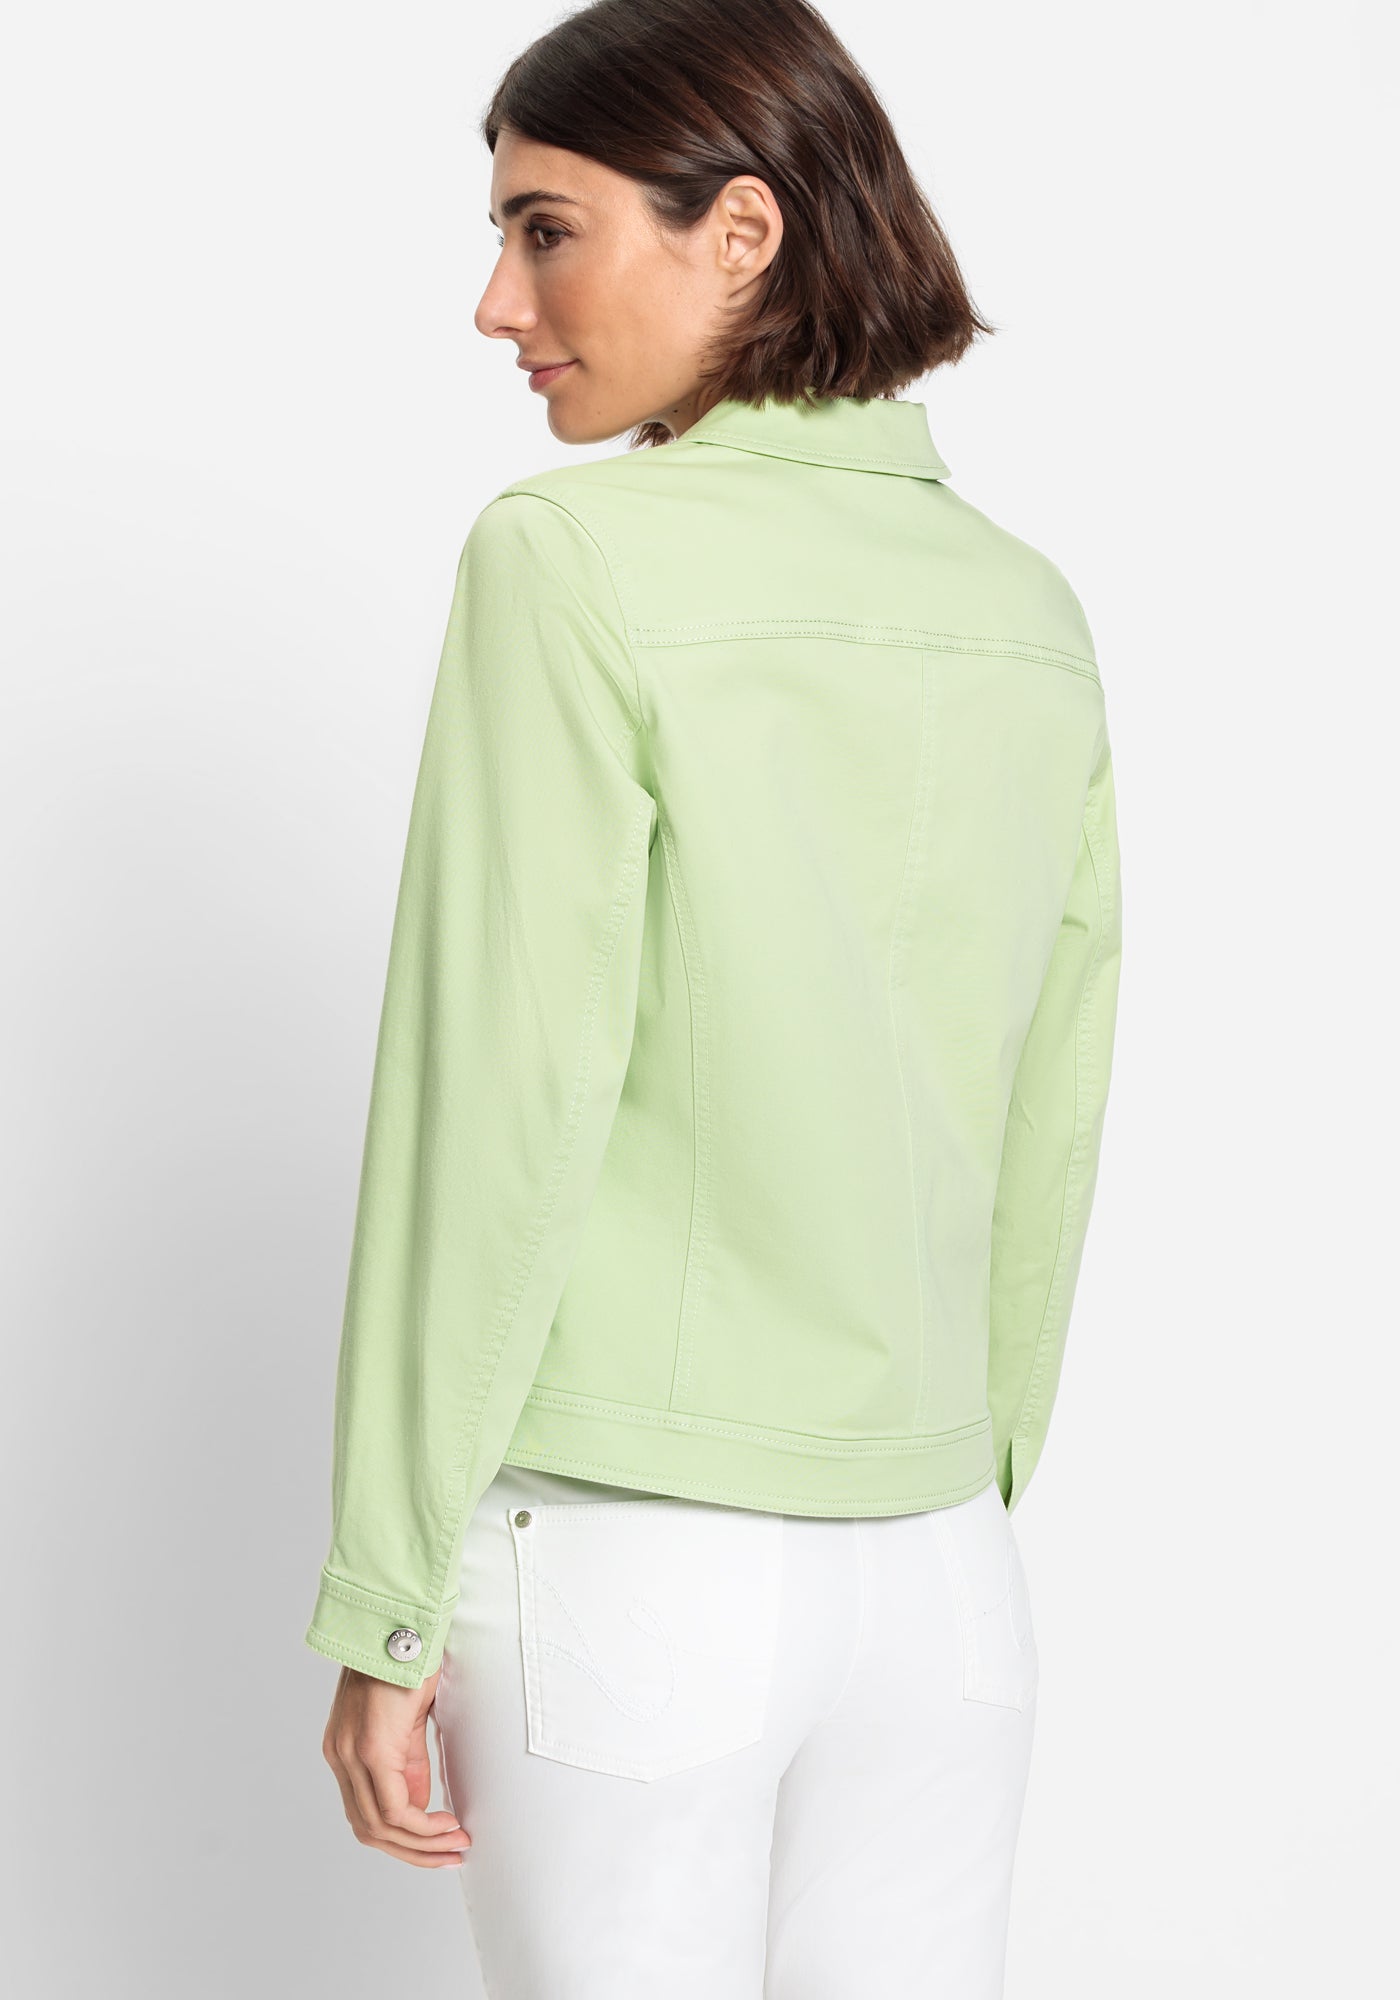 Indoor Jacket in Light Lime